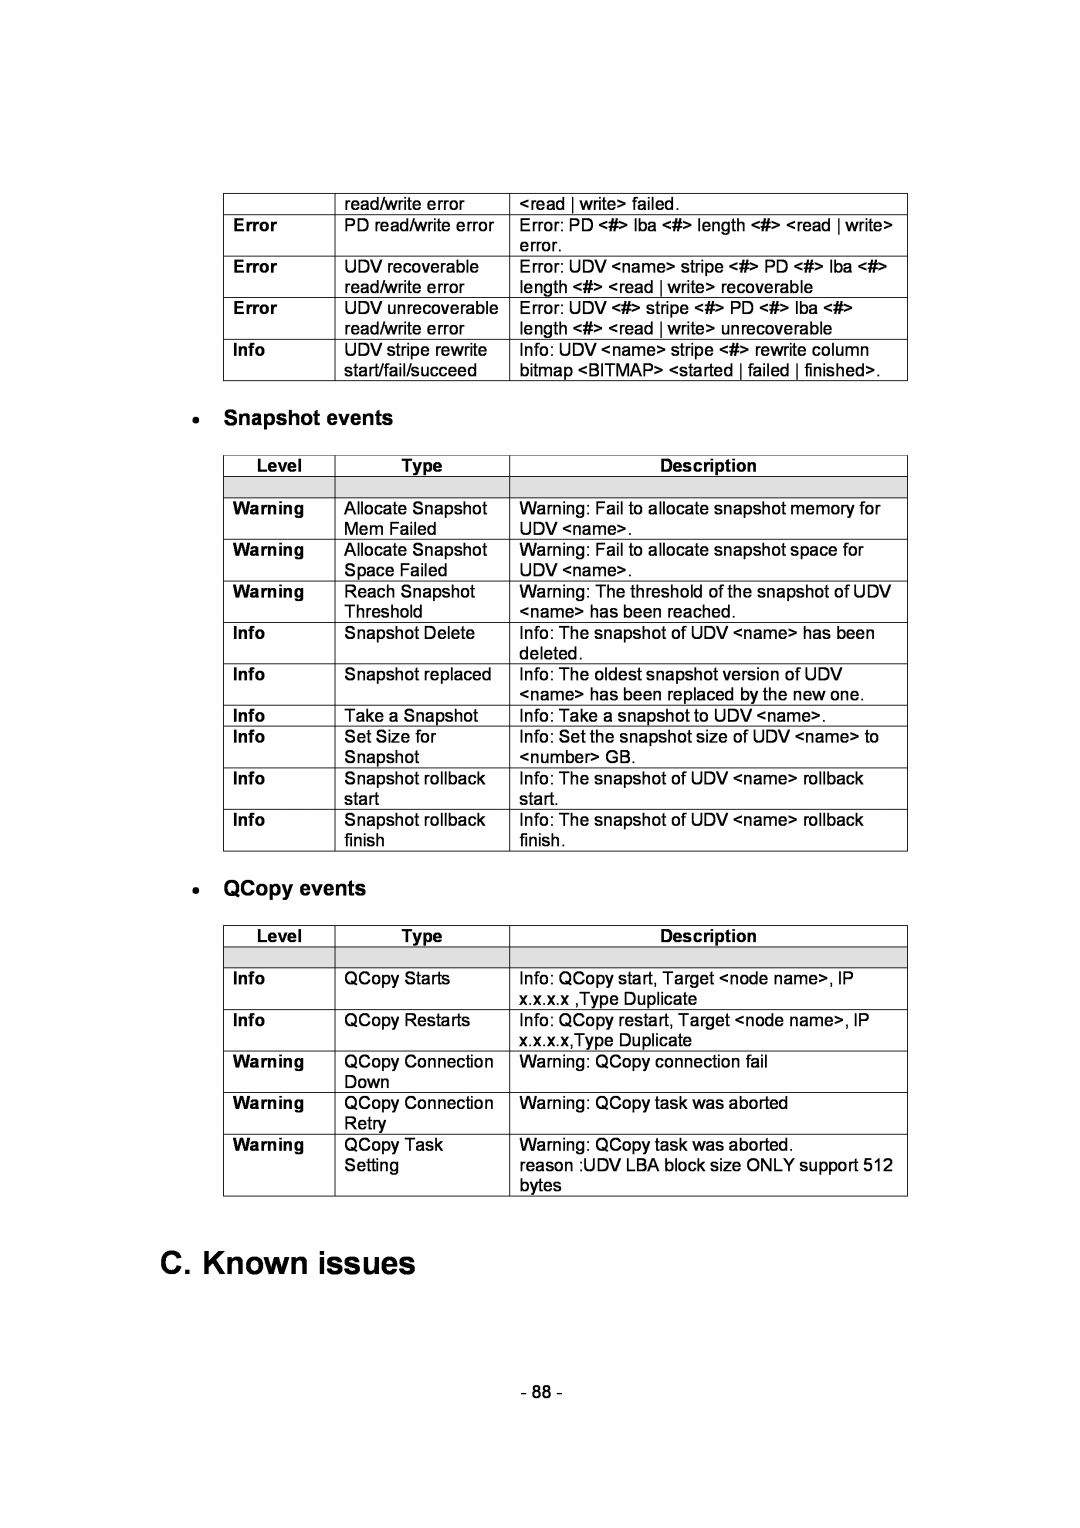 APC SCSI-SATA II manual C. Known issues, ∙ Snapshot events, ∙ QCopy events, Error, Info, Level, Type, Description 